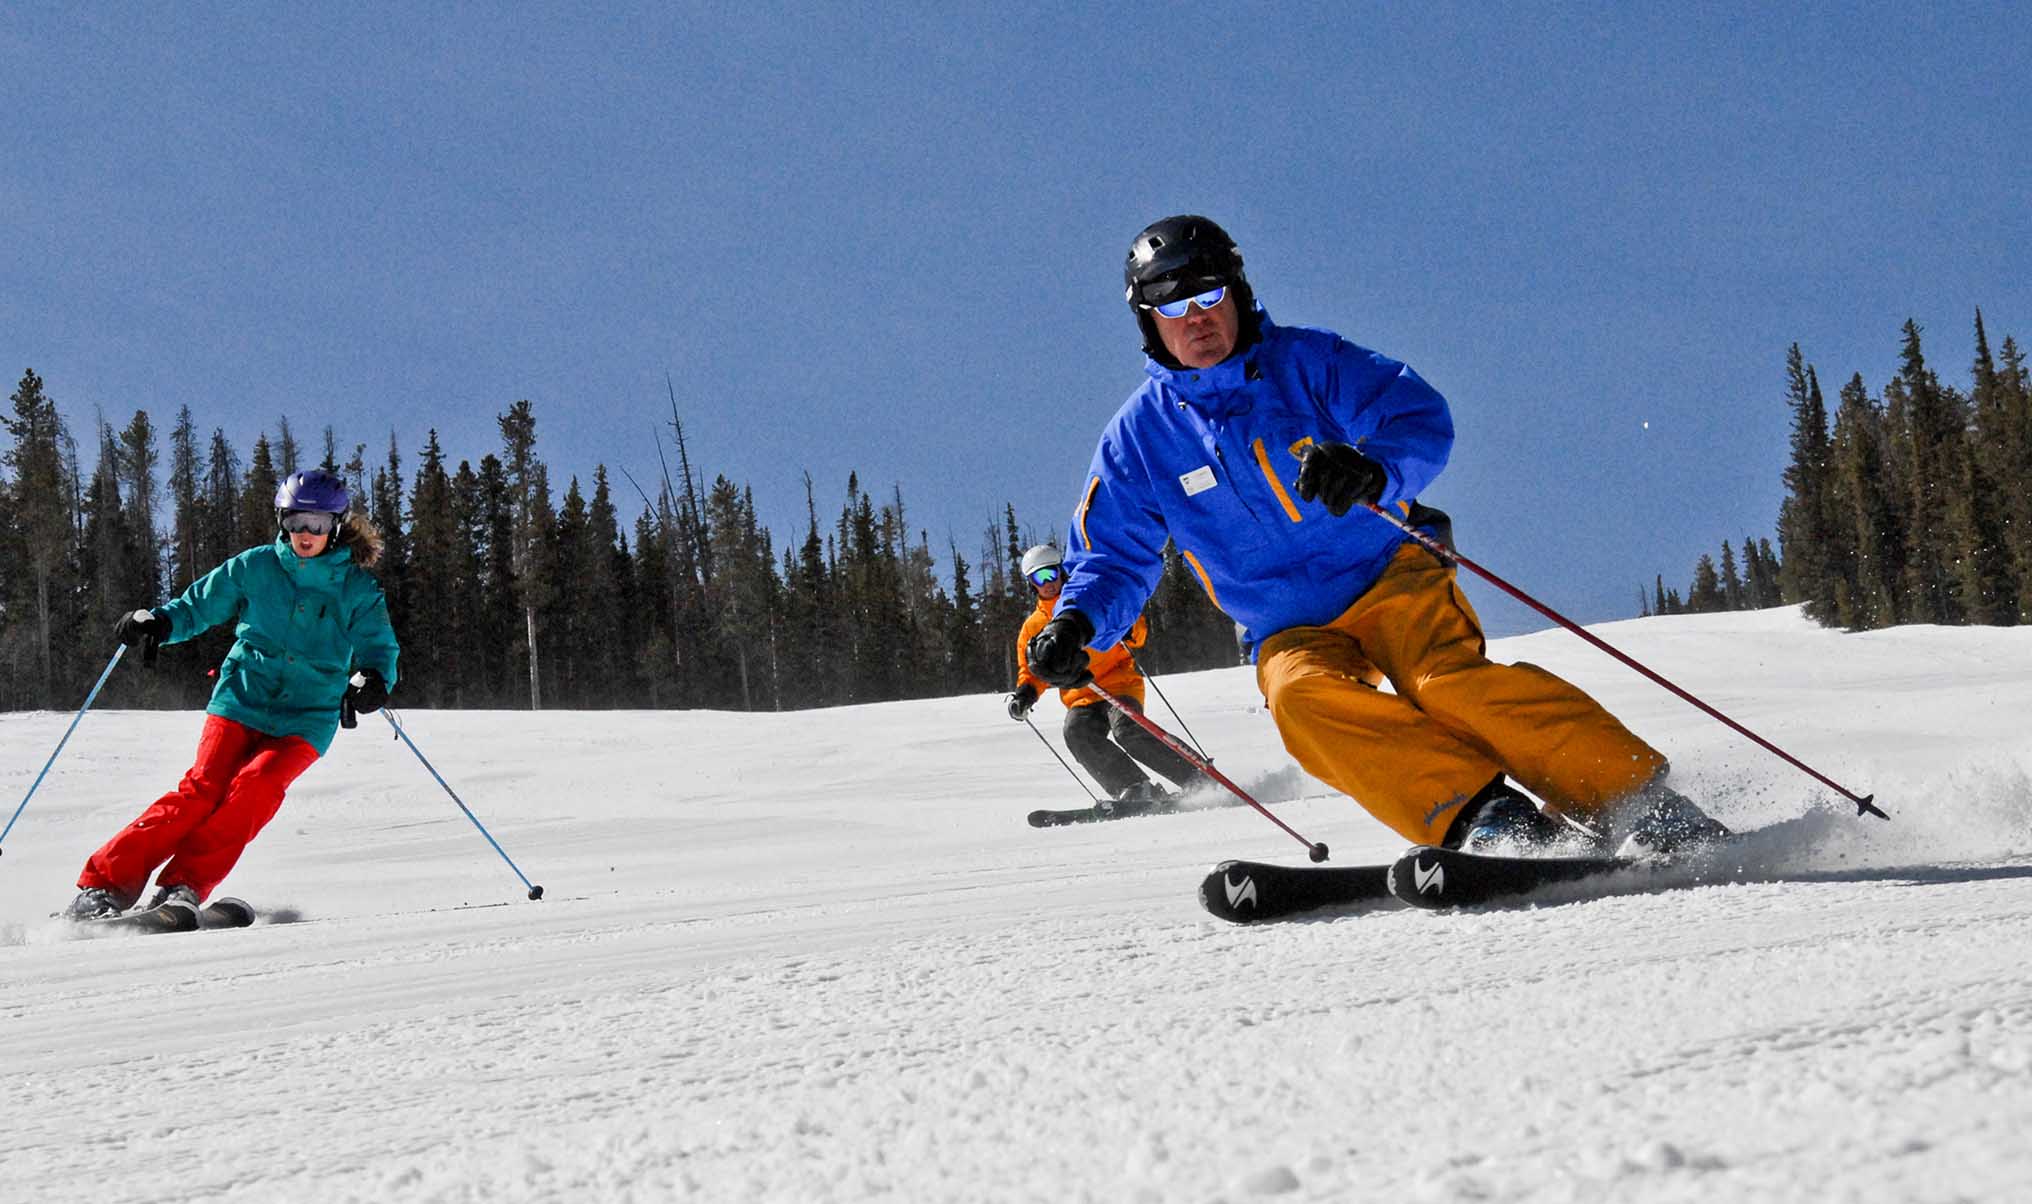 Skiing in winter photo